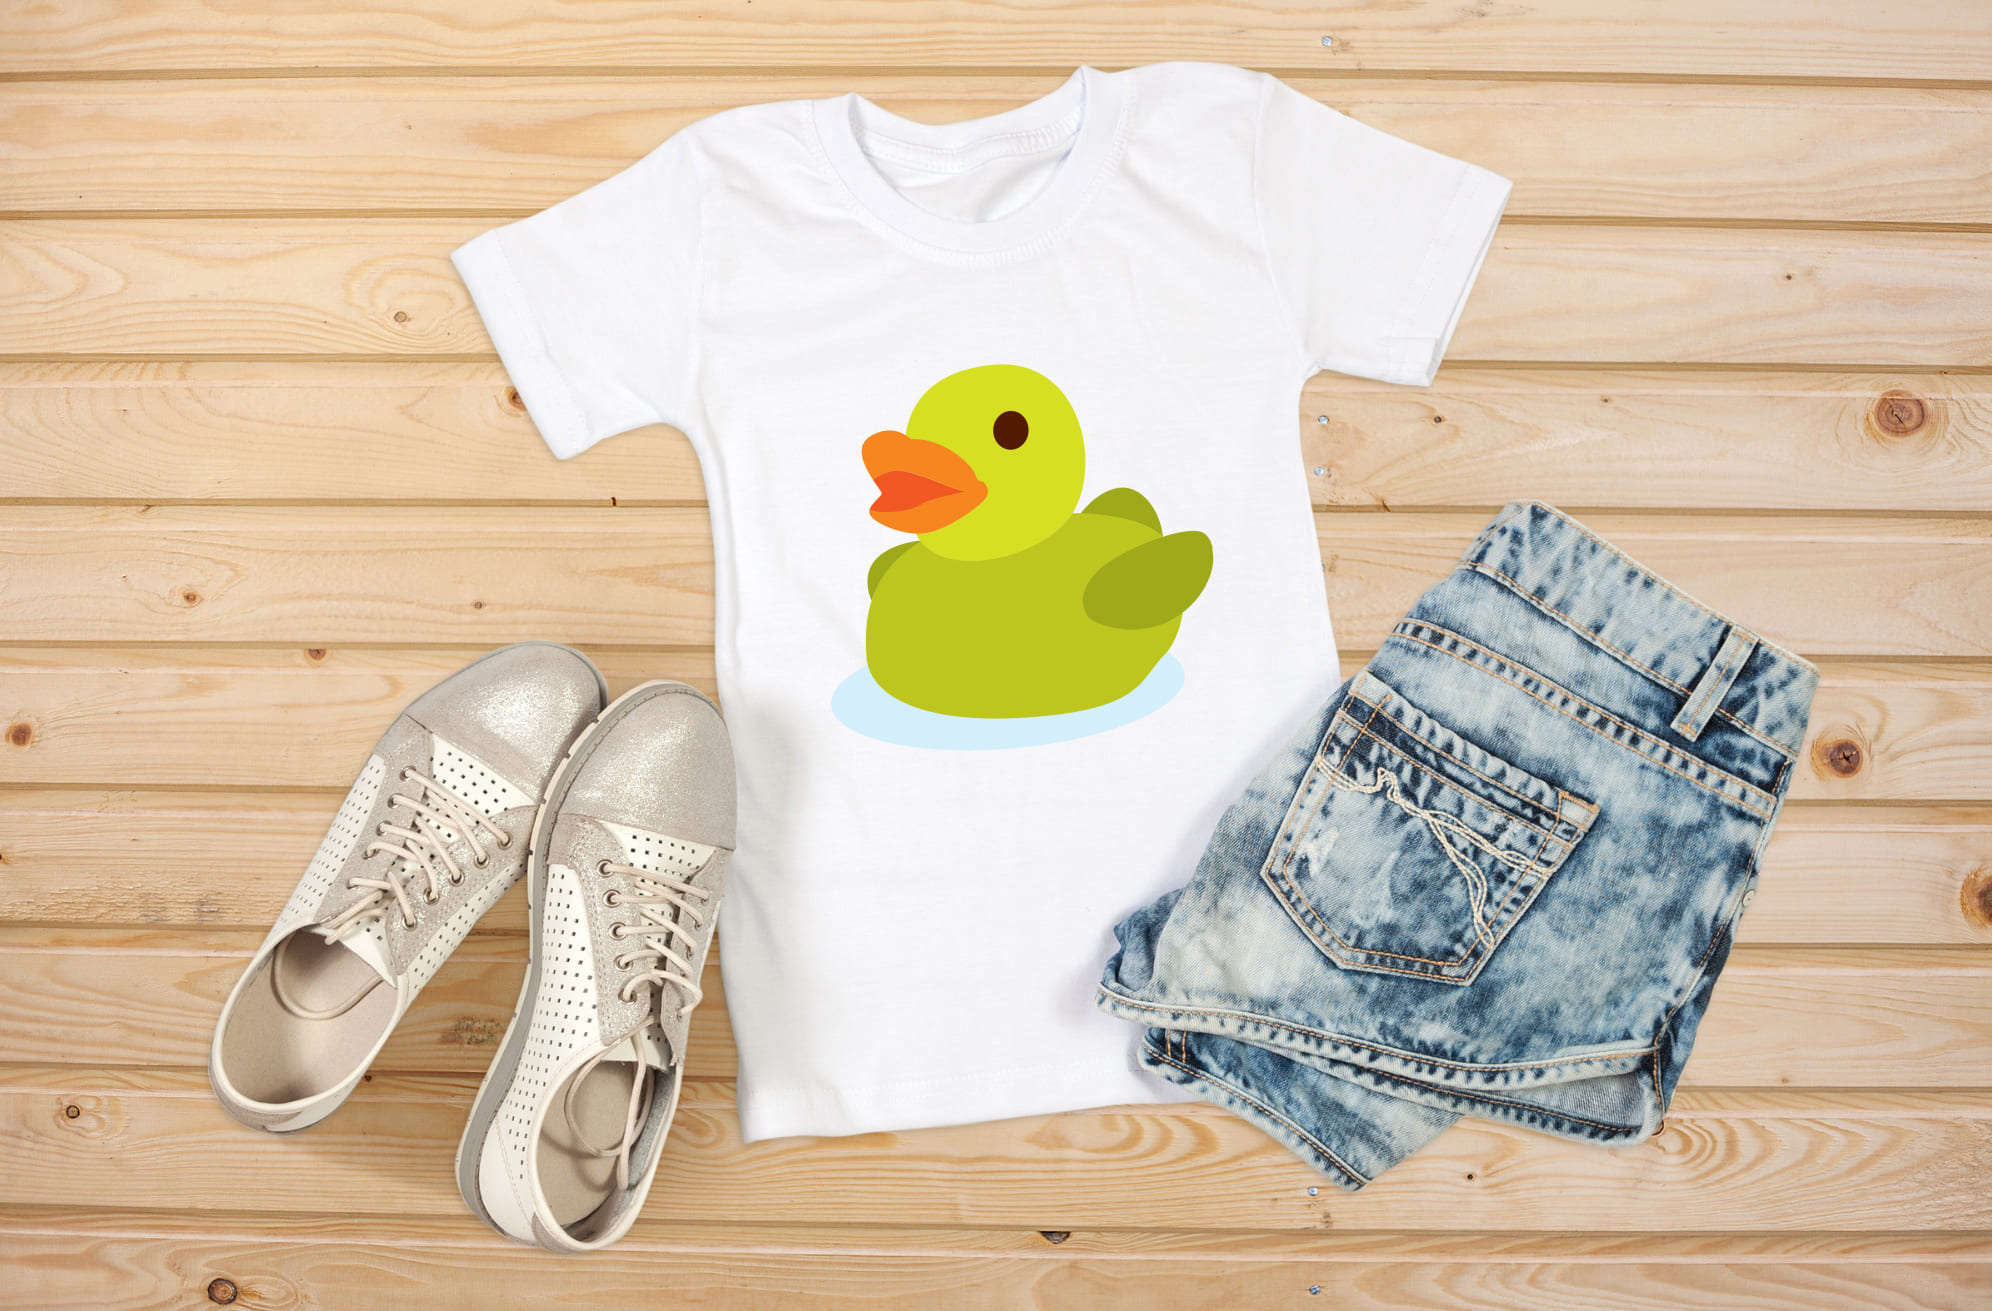 Rubber Duck SVG T-Shirt Designs – MasterBundles